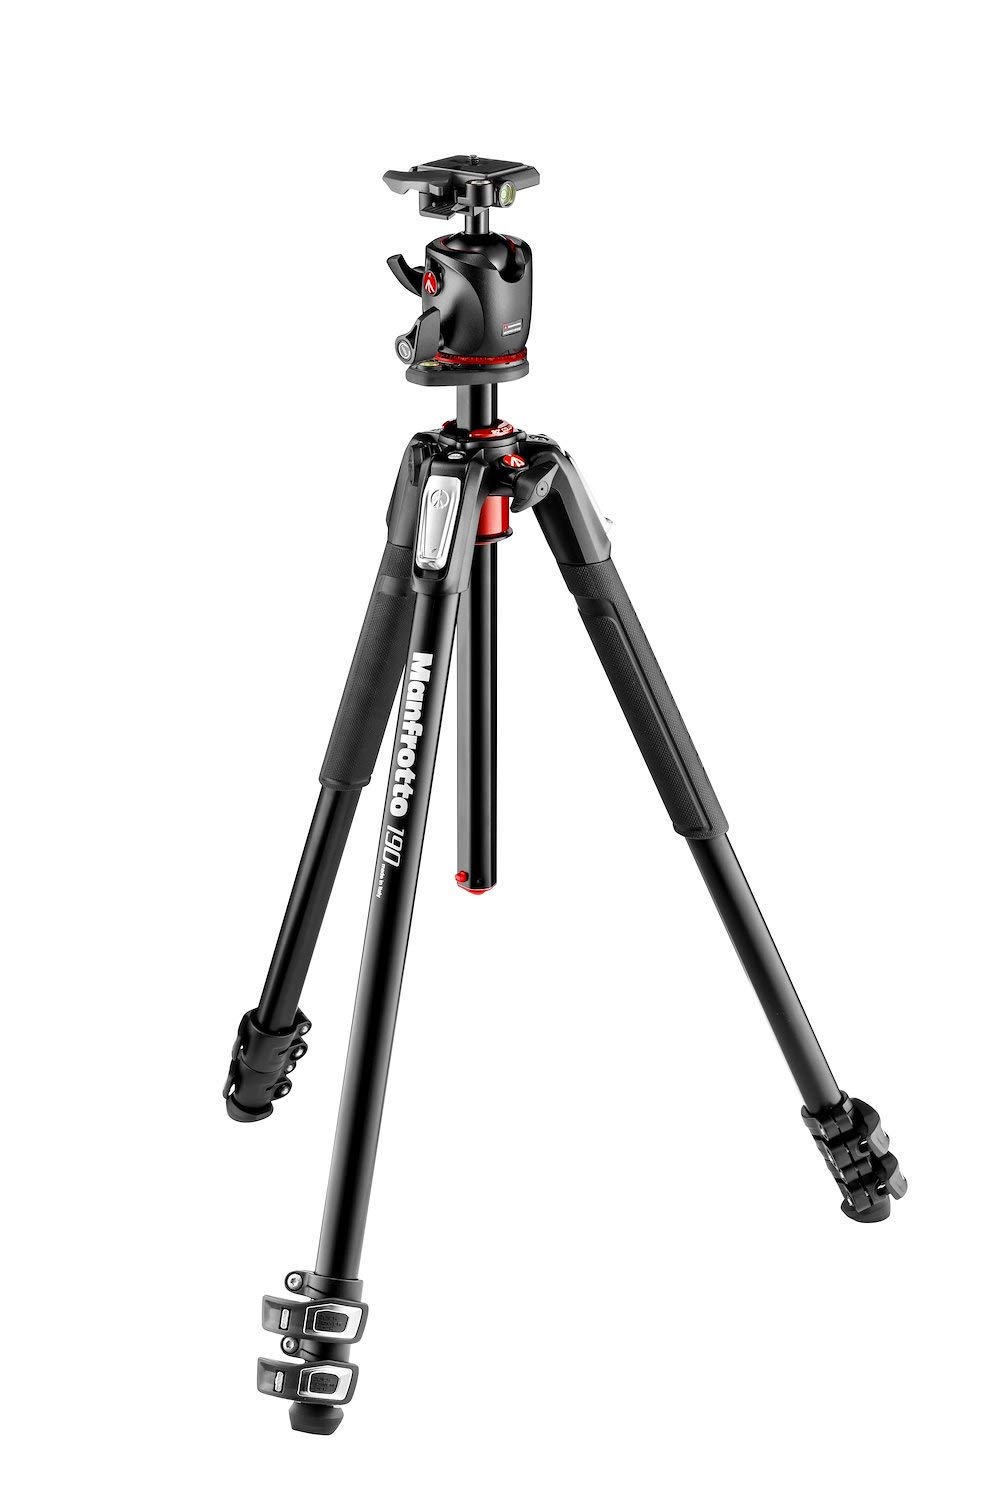 Manfrotto MK190XPRO3-BHQ2 Digitale Film/Kameras Schwarz Stativ - Stative (Digitale Film/Kameras, 7 kg, 3 Bein(e), 171,5 cm, Schwarz, Aluminium)